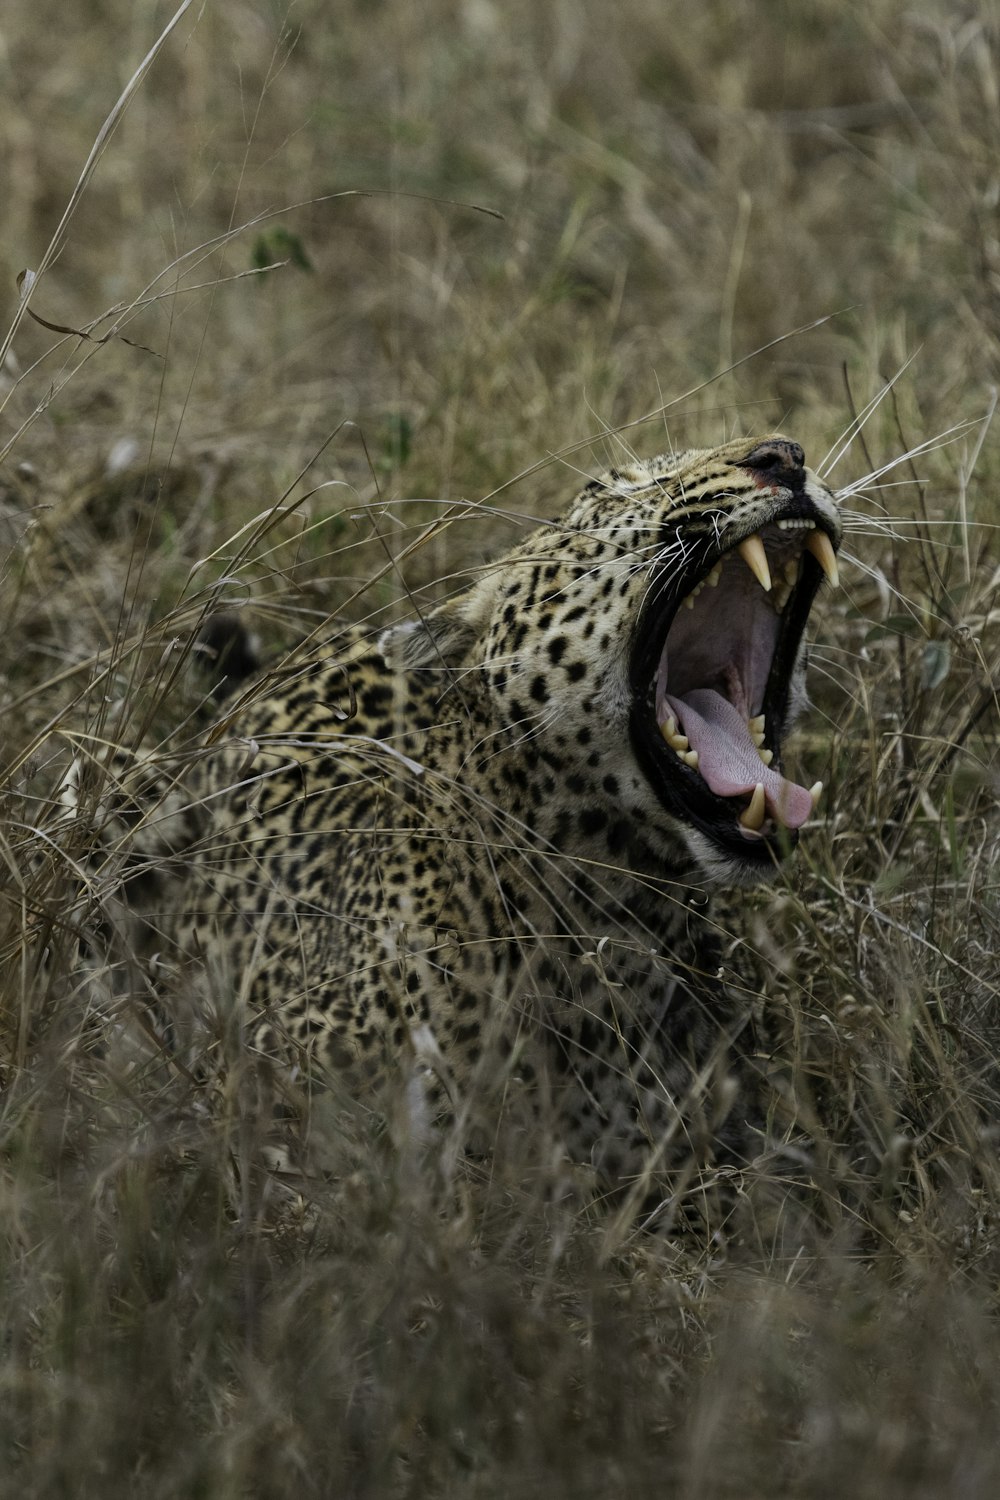 a cheetah yawns in a field of tall grass